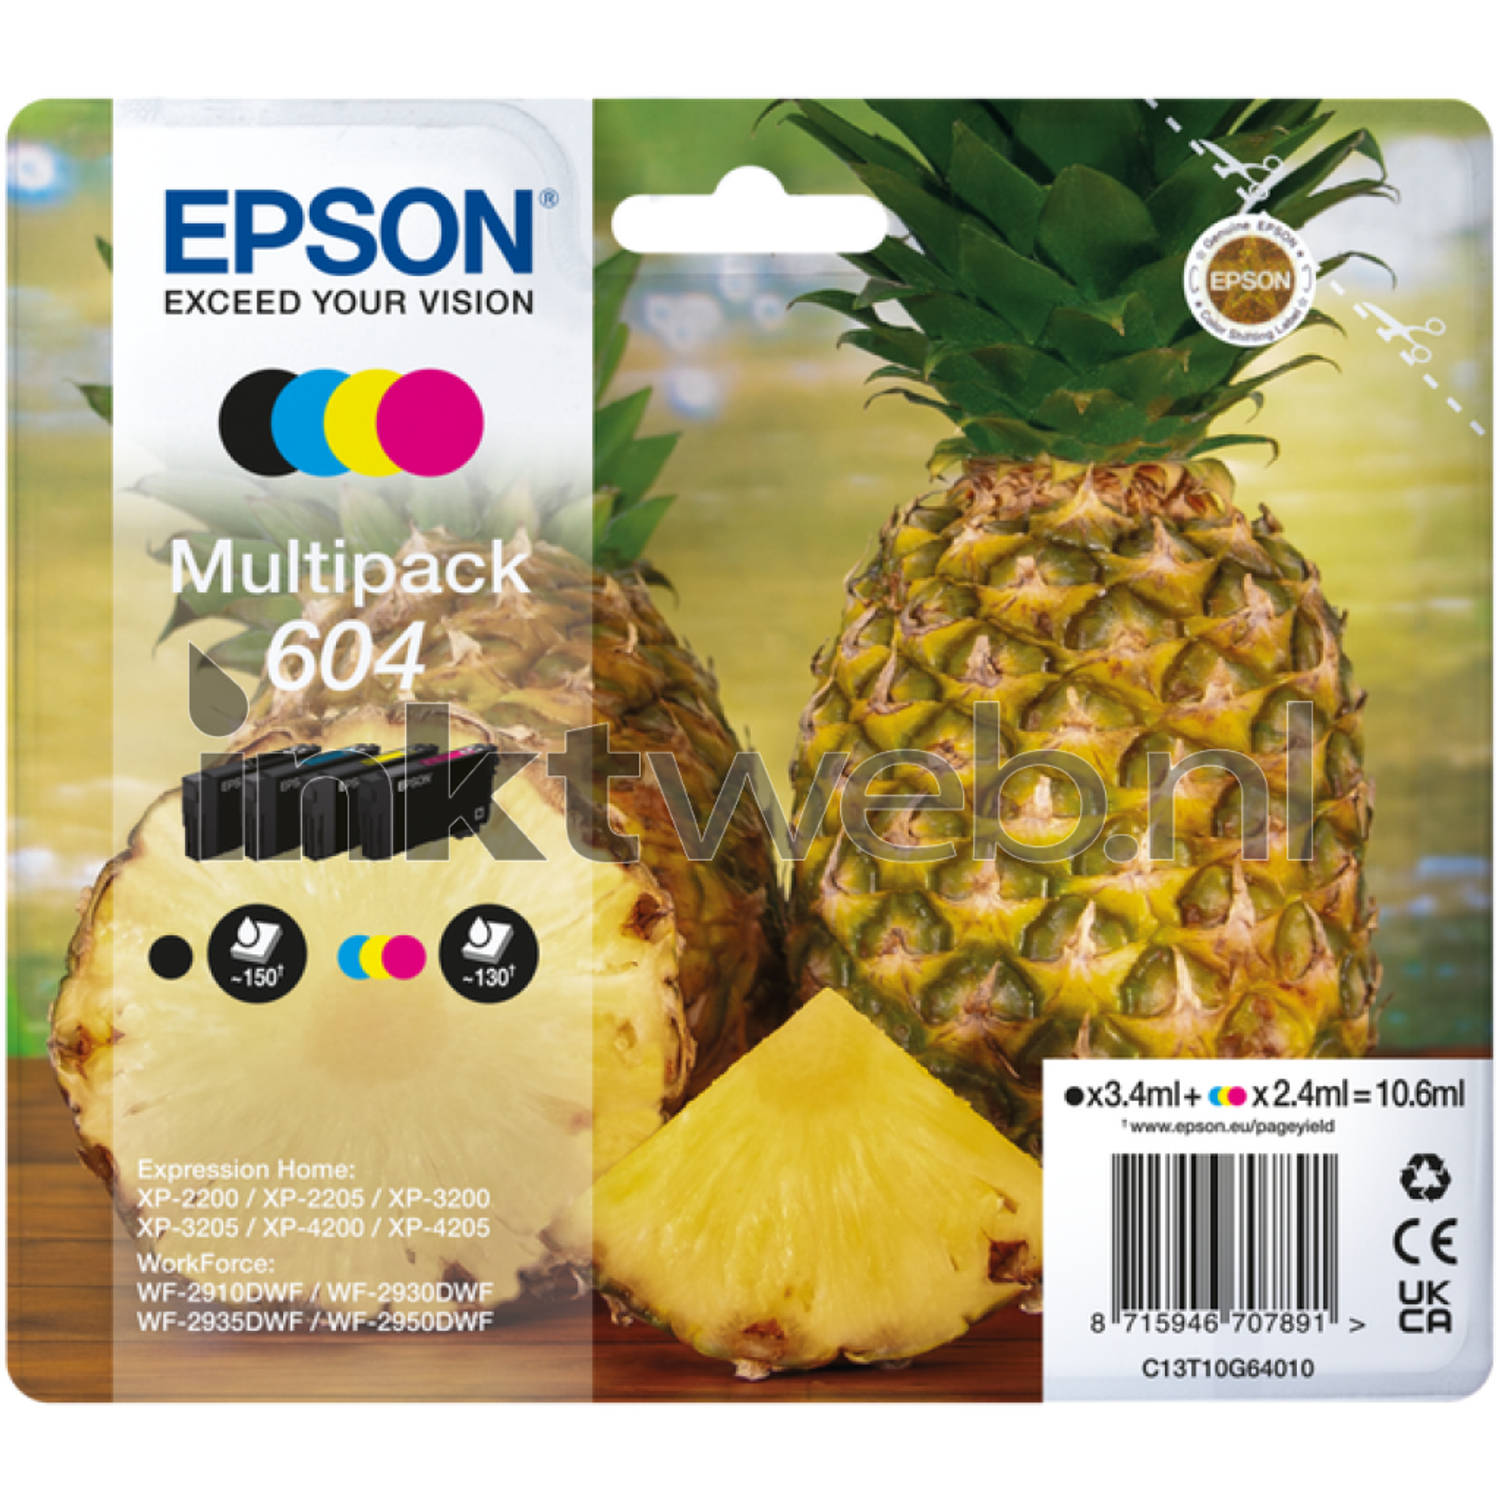 Epson 604, EasyMail Multipack (Ananas)